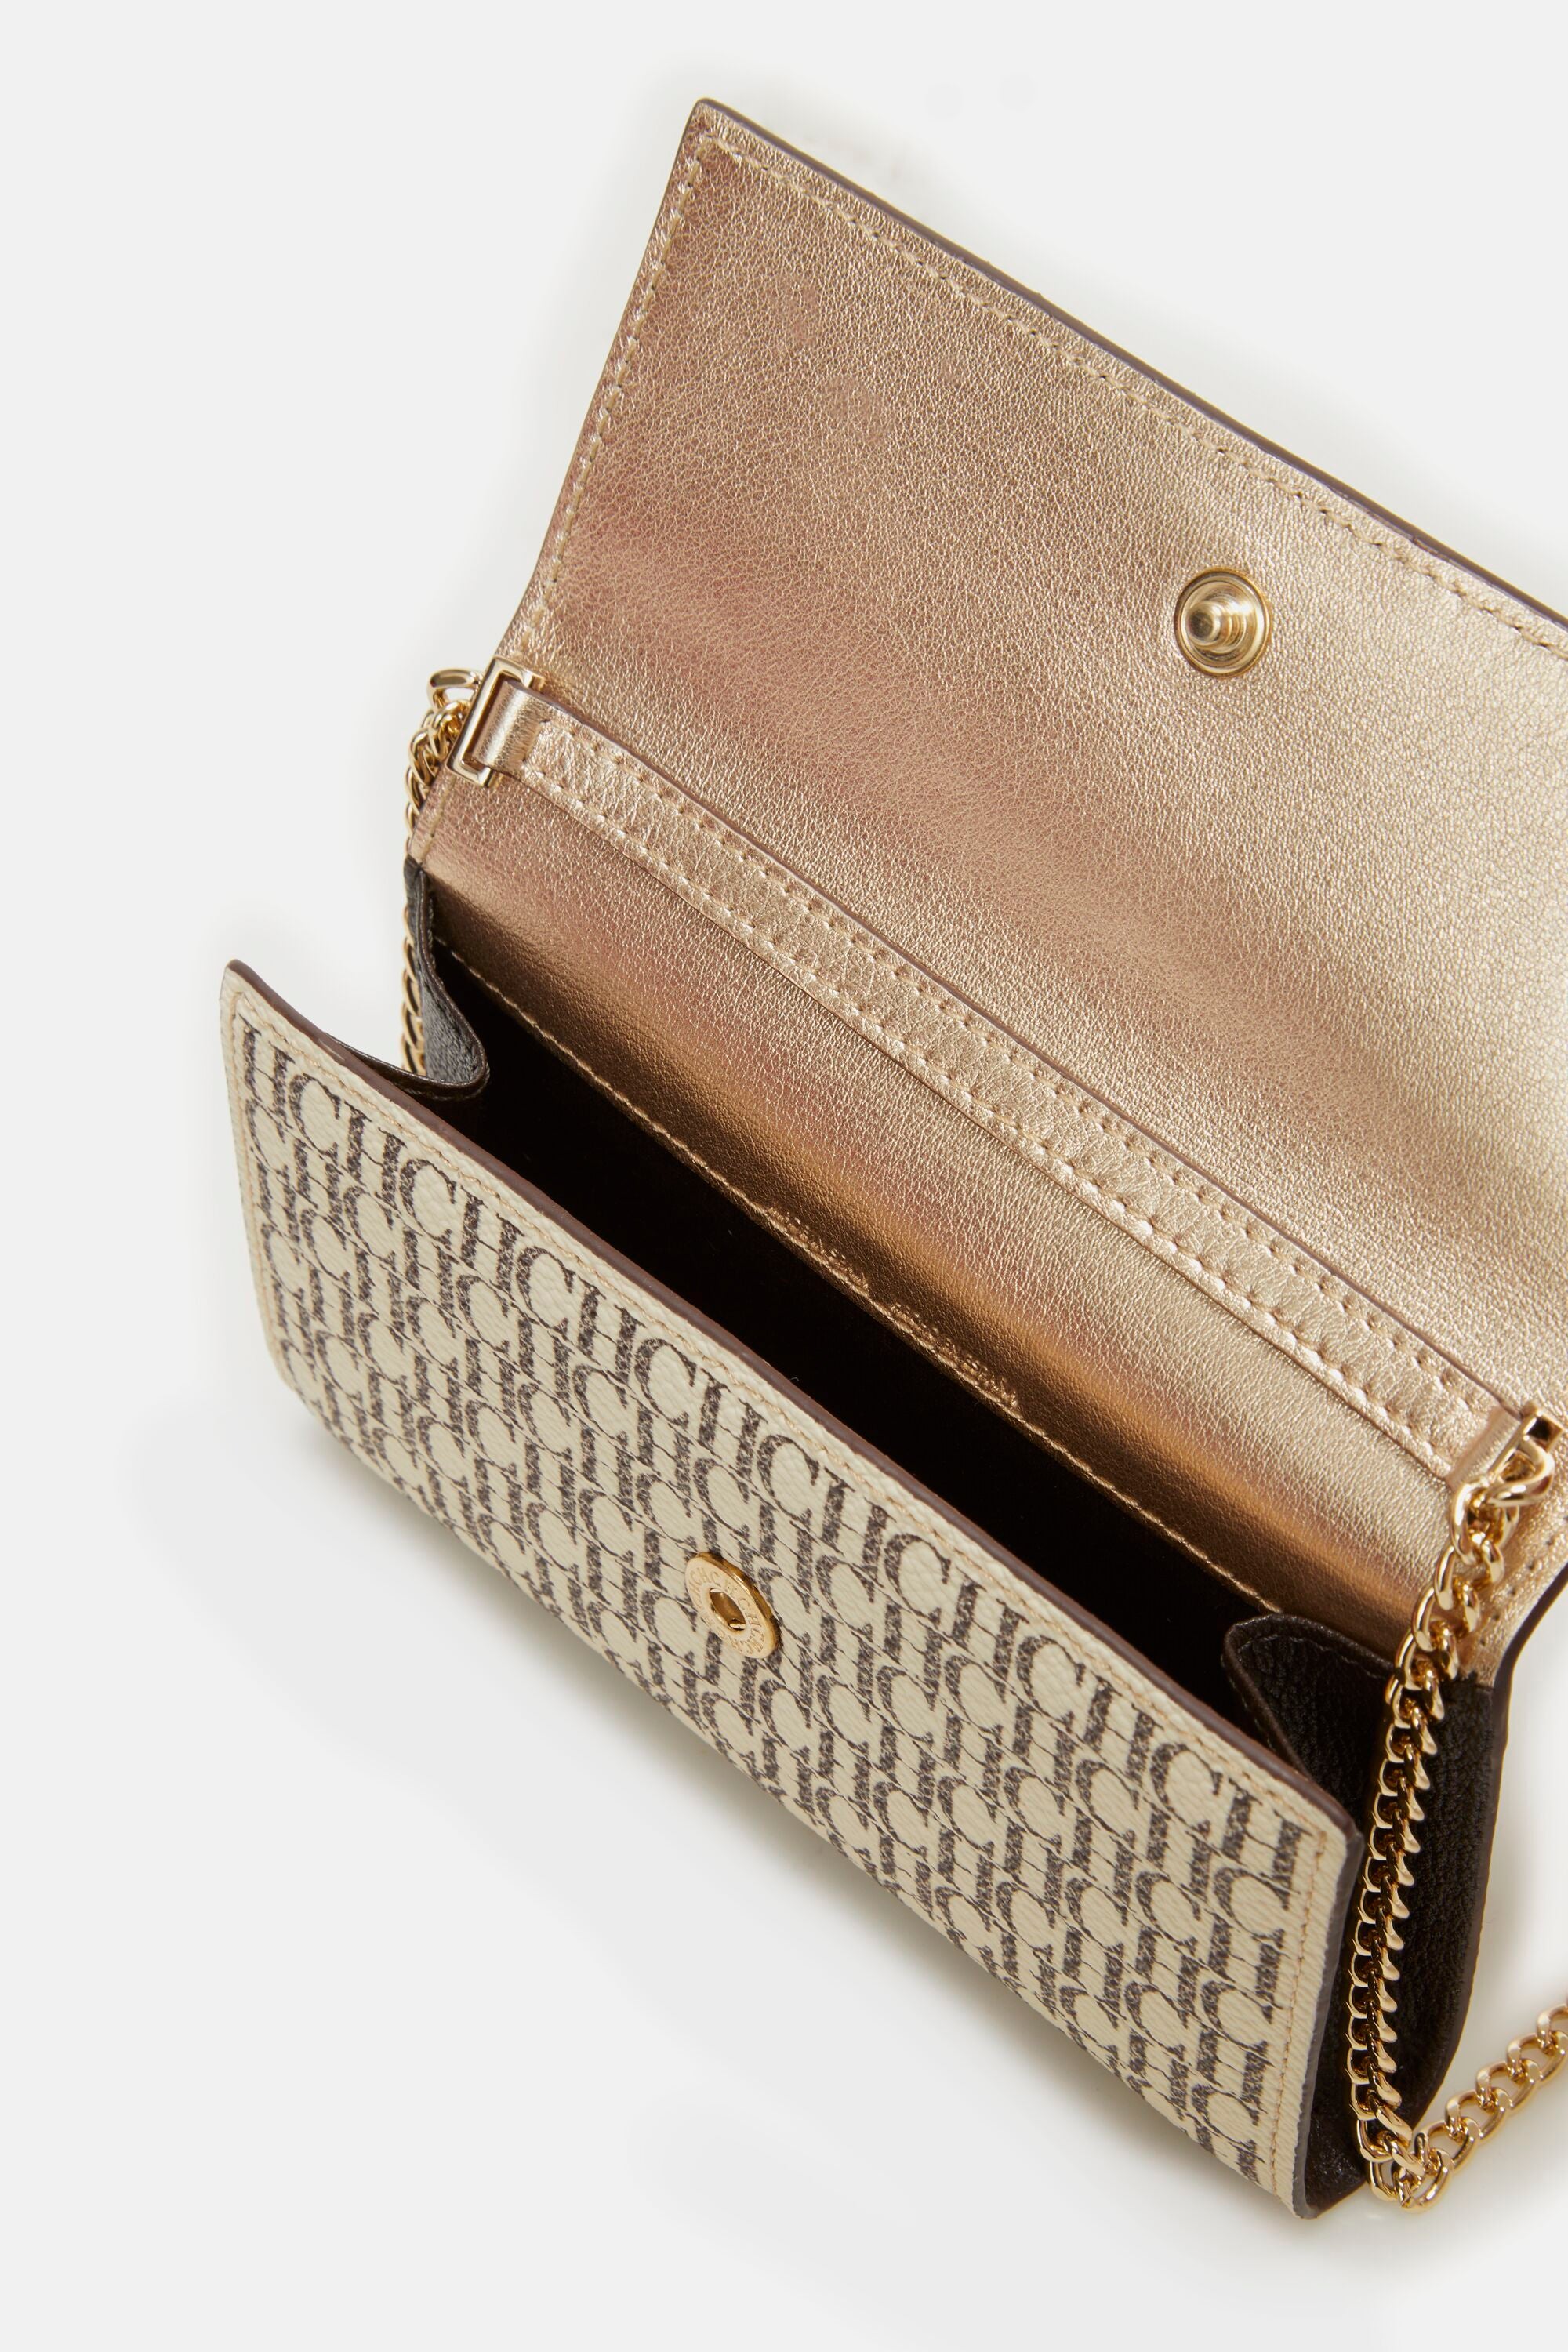 Carolina Herrera Burgundy/Brown PVC and Leather Wallet On Chain